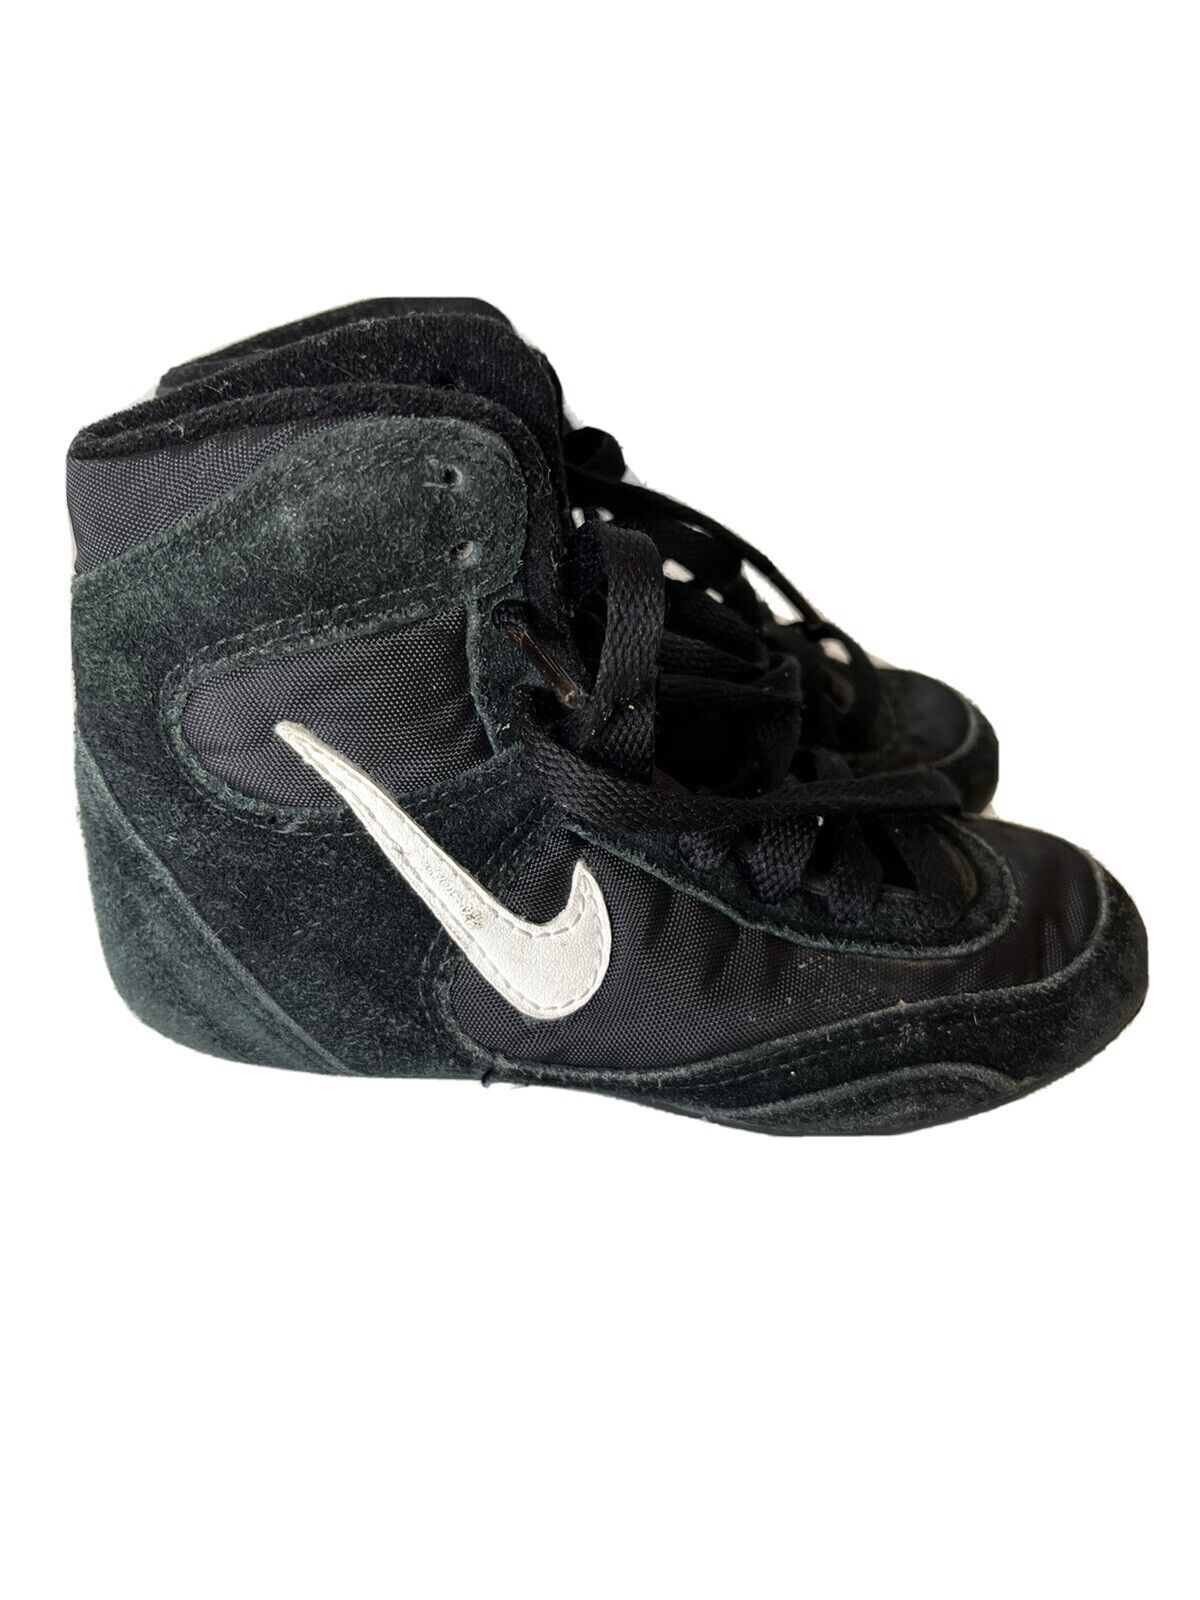 Nike Wrestling shoes size 12C US Little Kid